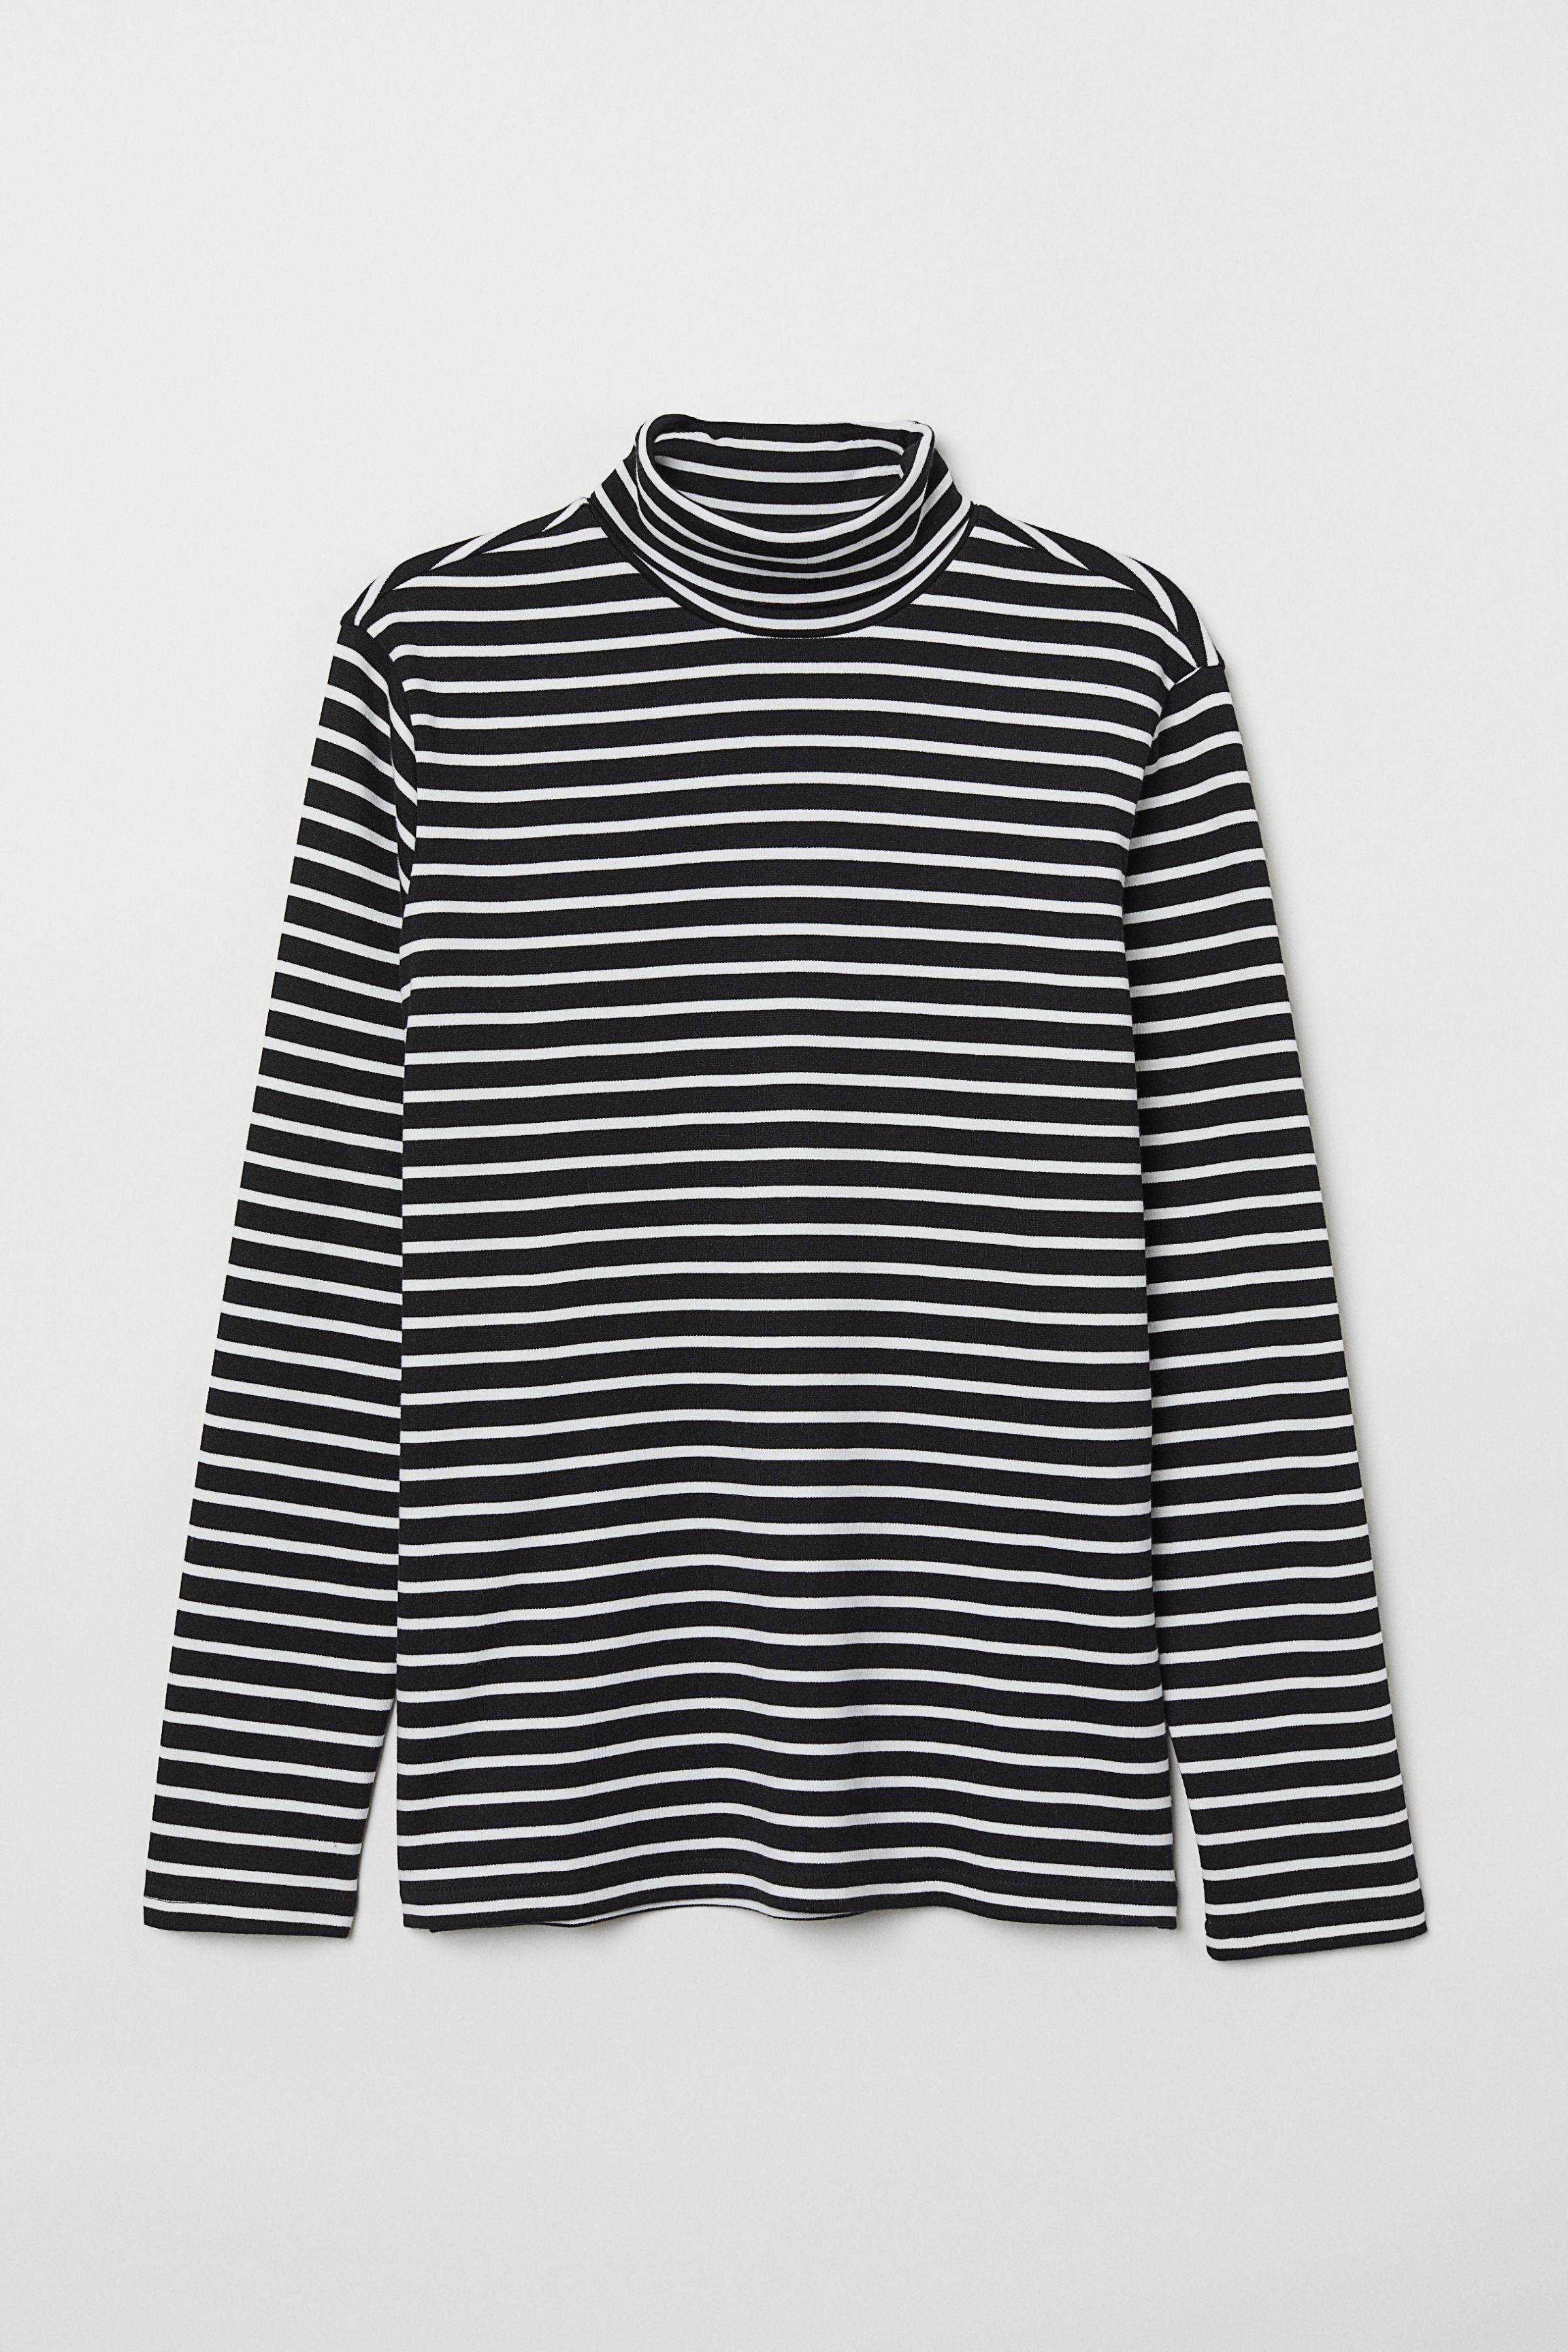 H&M Cotton Striped Turtleneck Shirt in Black/White Striped (Black) for Men  | Lyst